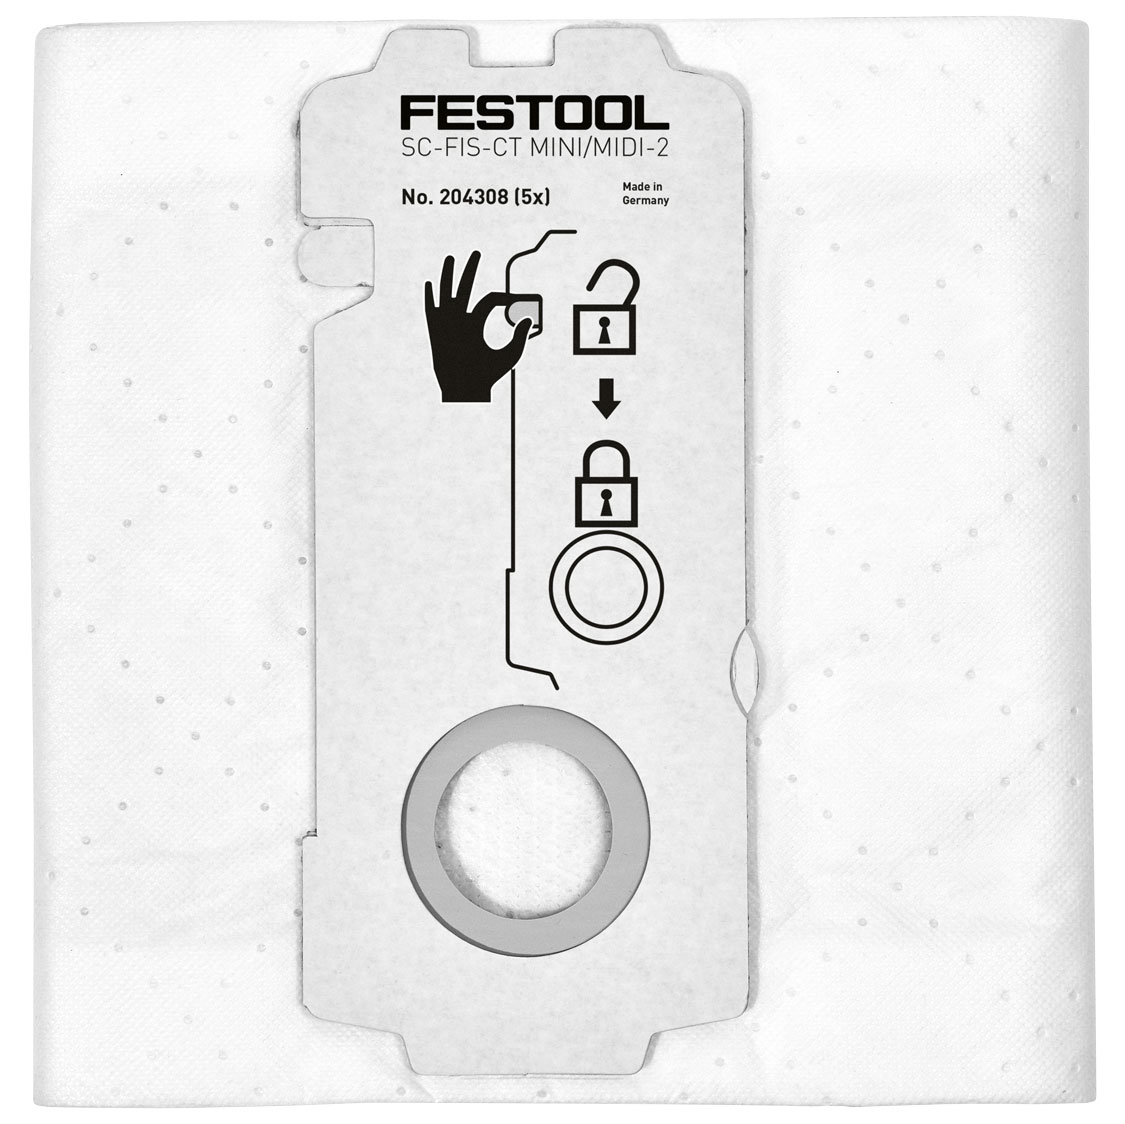 Festool SELFCLEAN Filtersack SC-FIS-CT MINI/MIDI-2